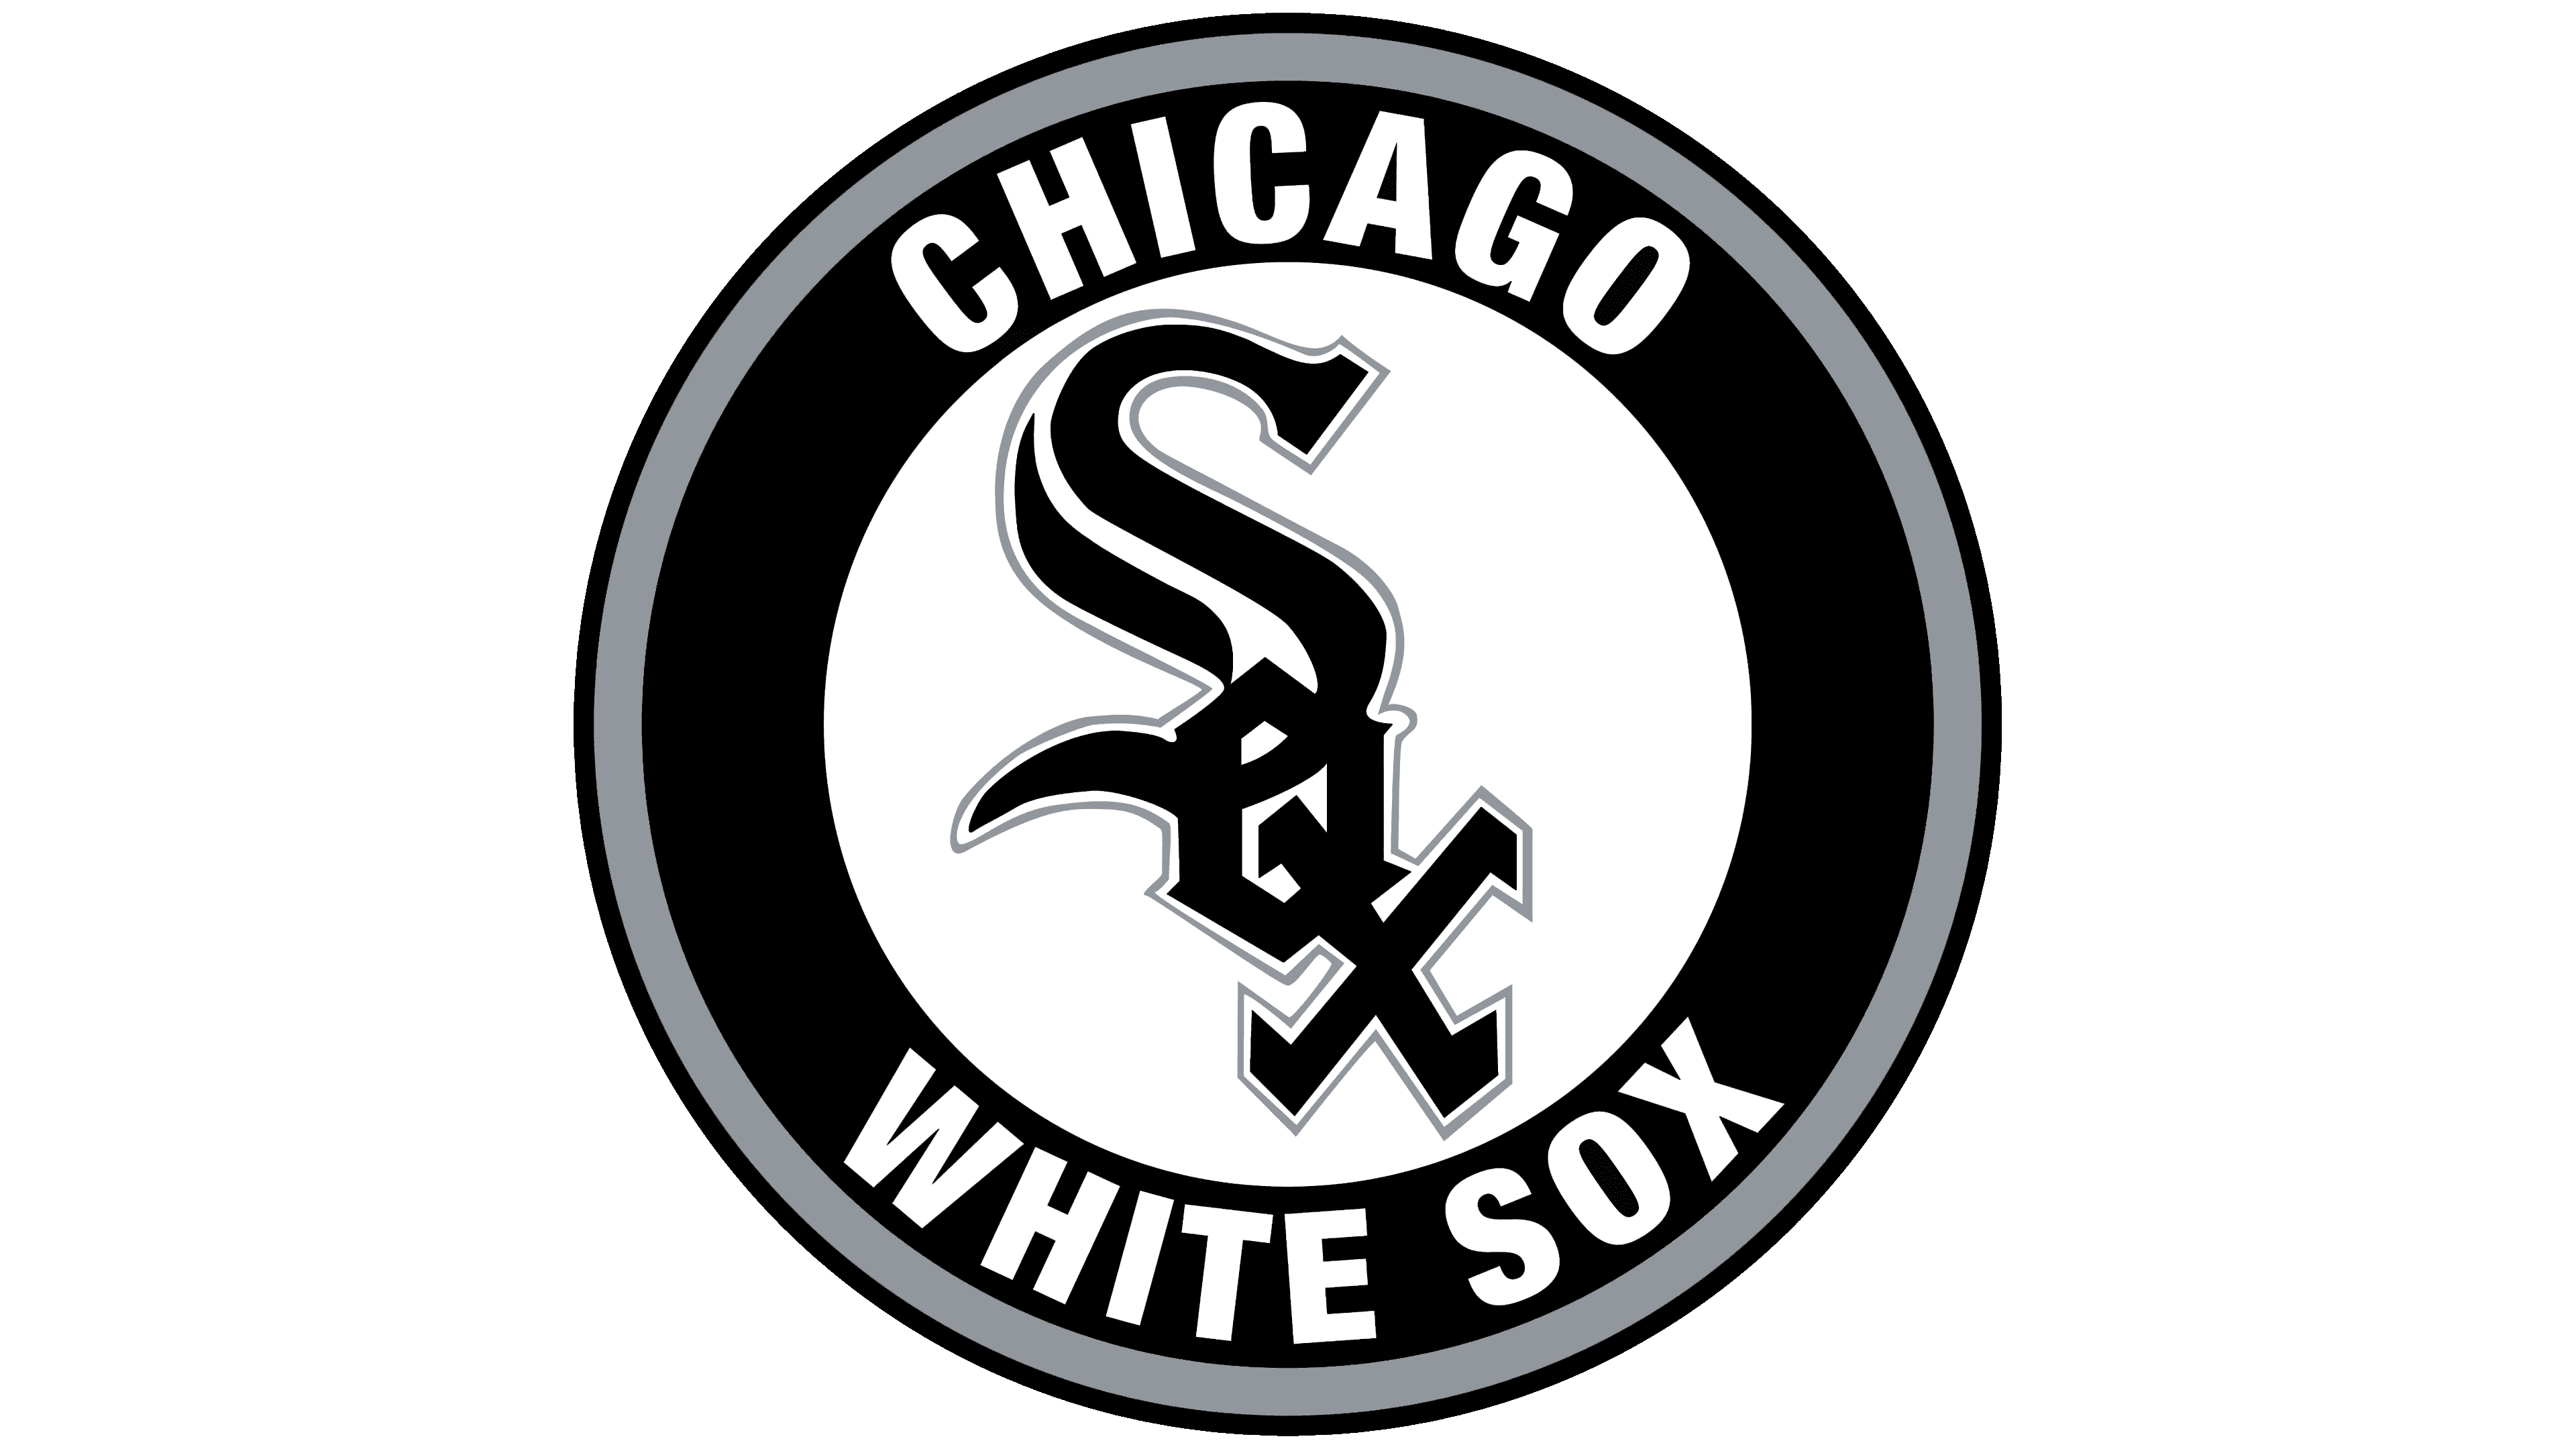 Chicago White Sox Logo Printable